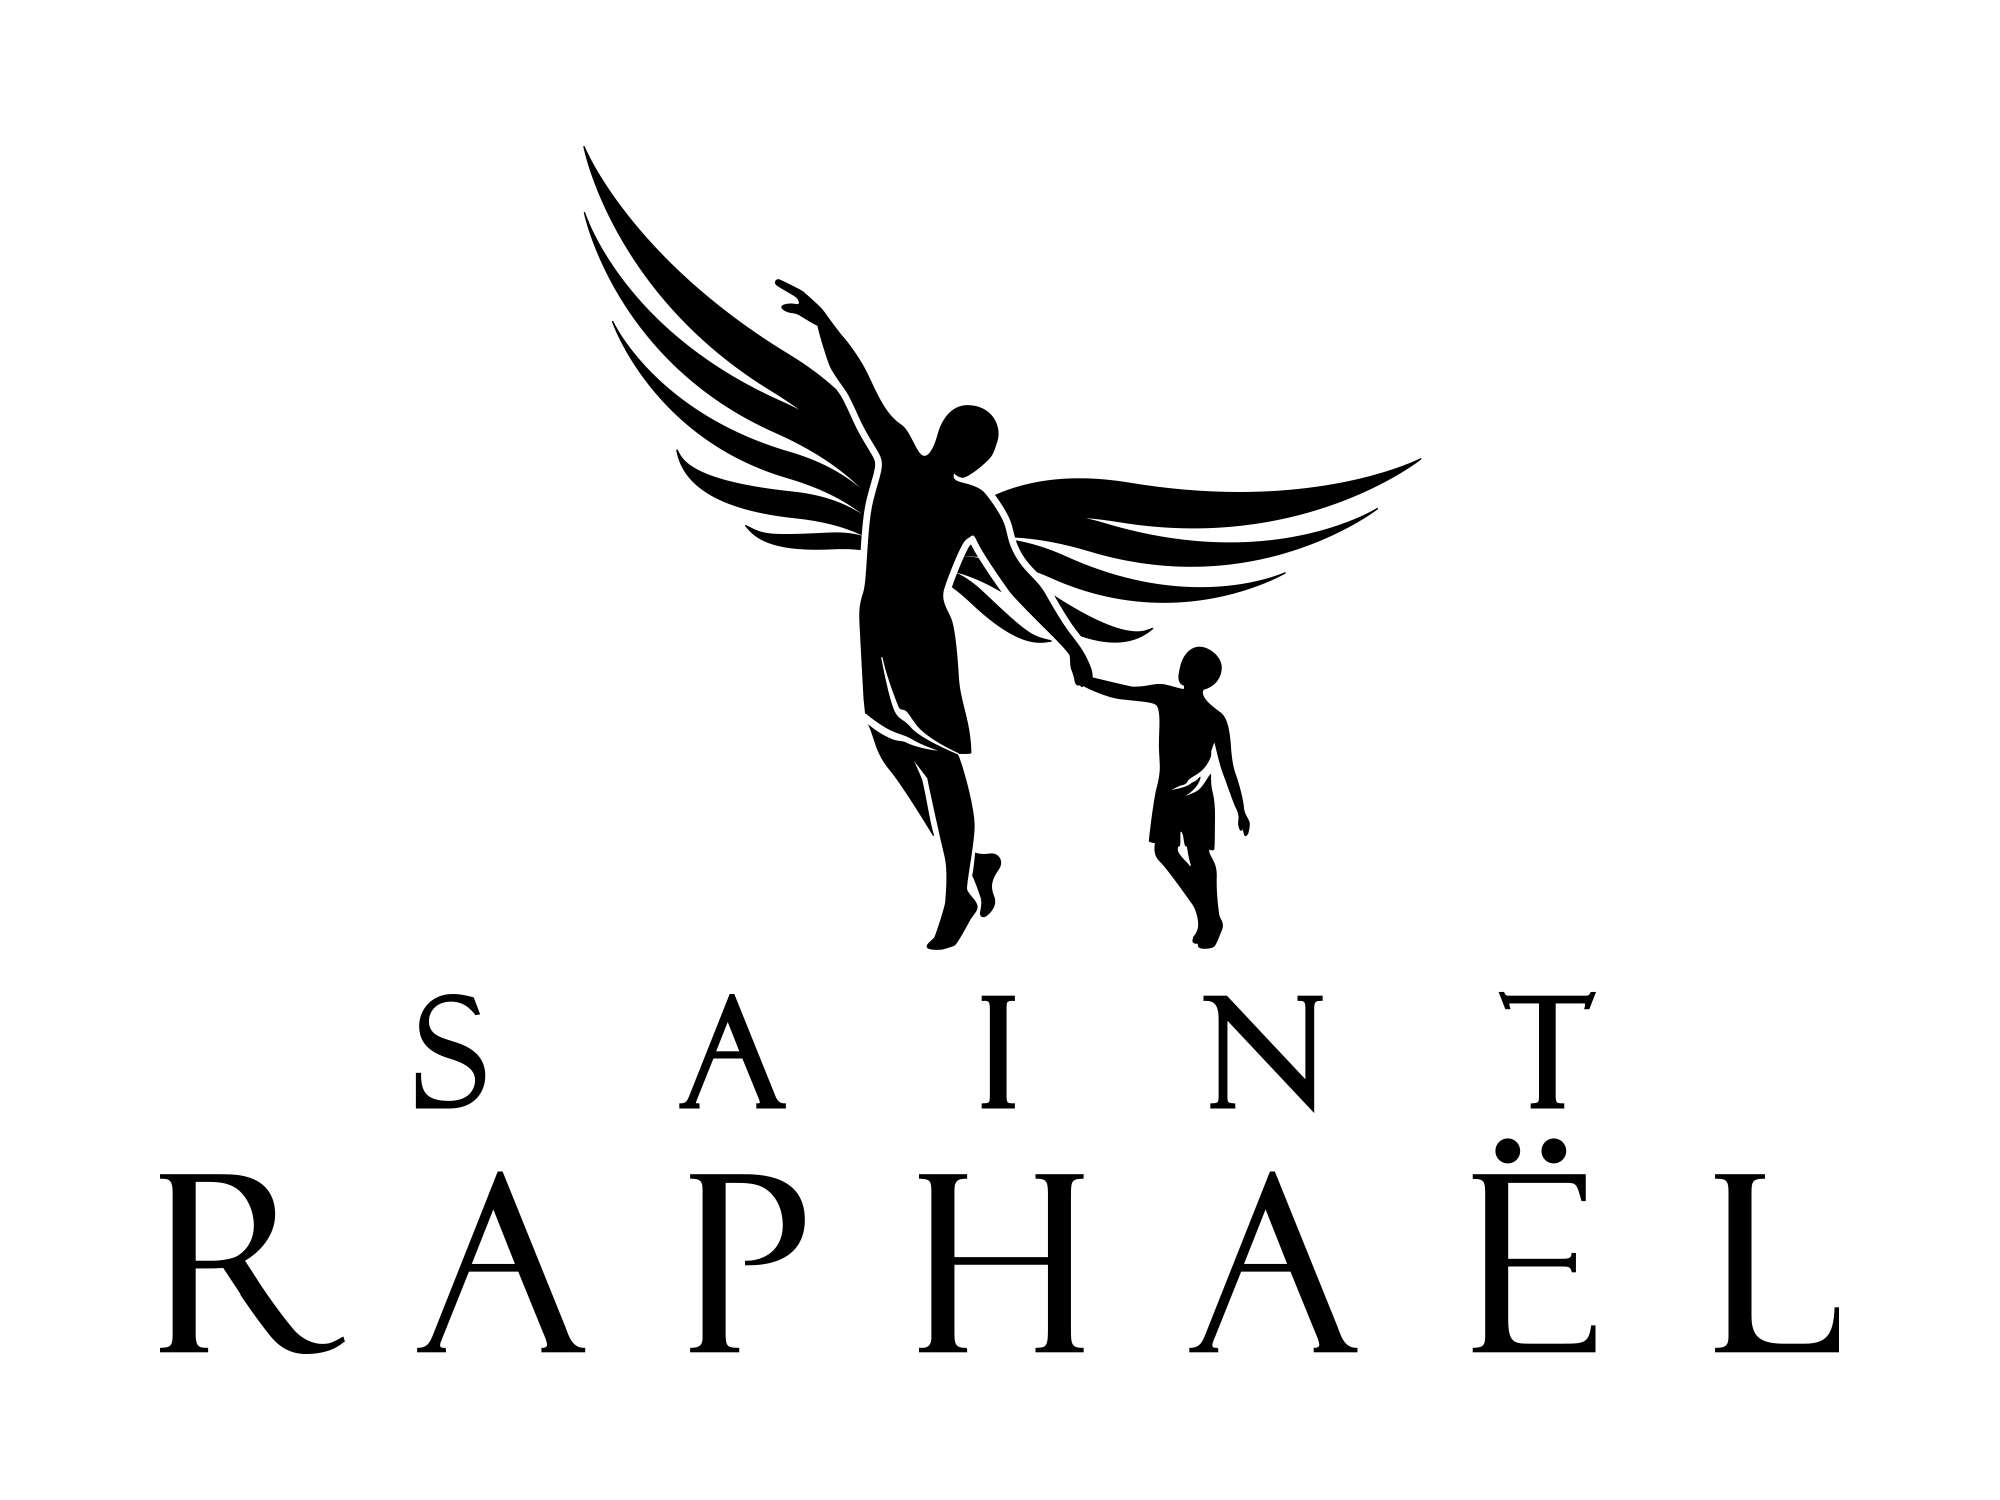 Saint Raphael